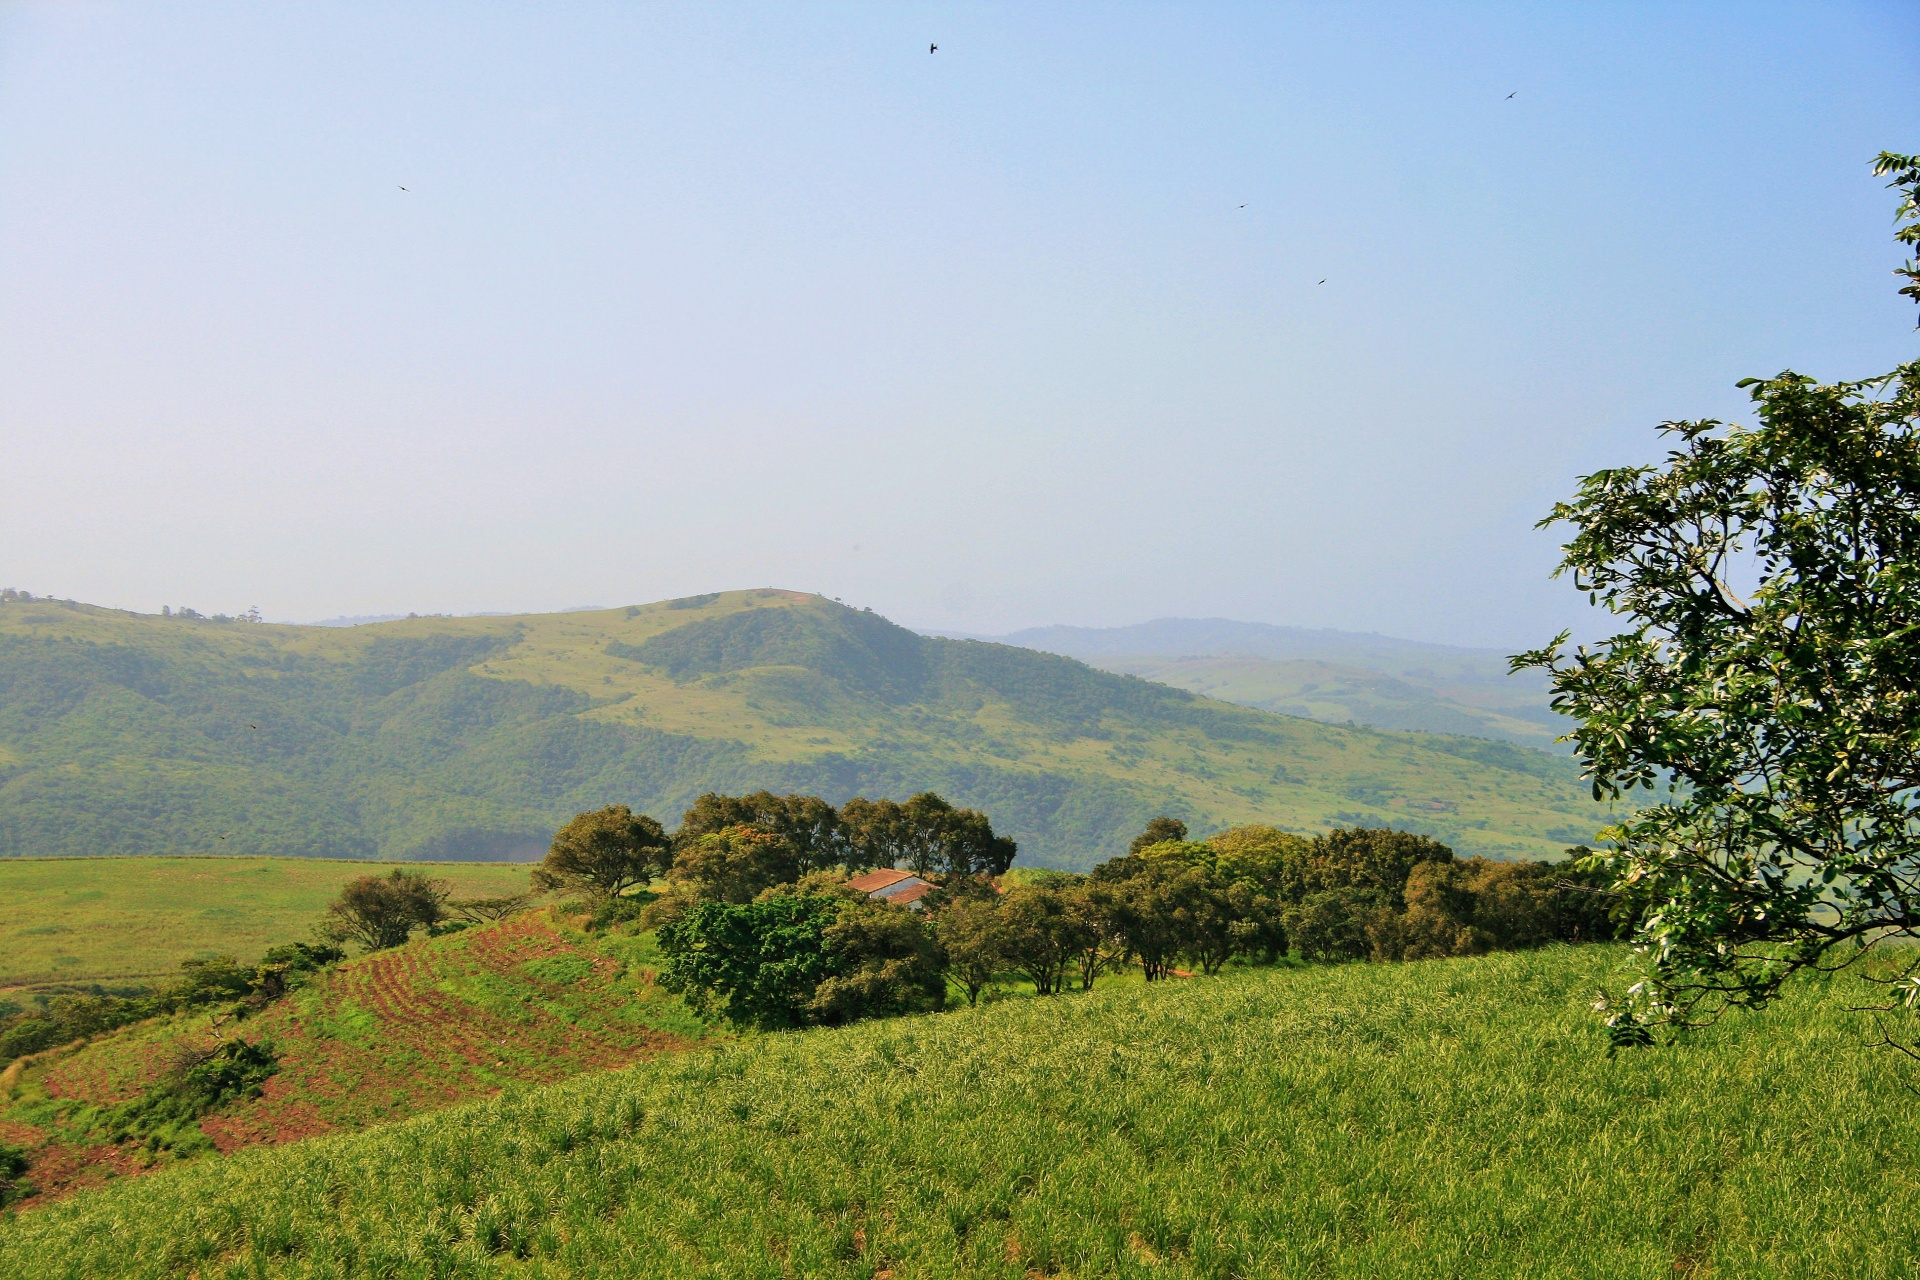 Sugar Cane Covered Hills